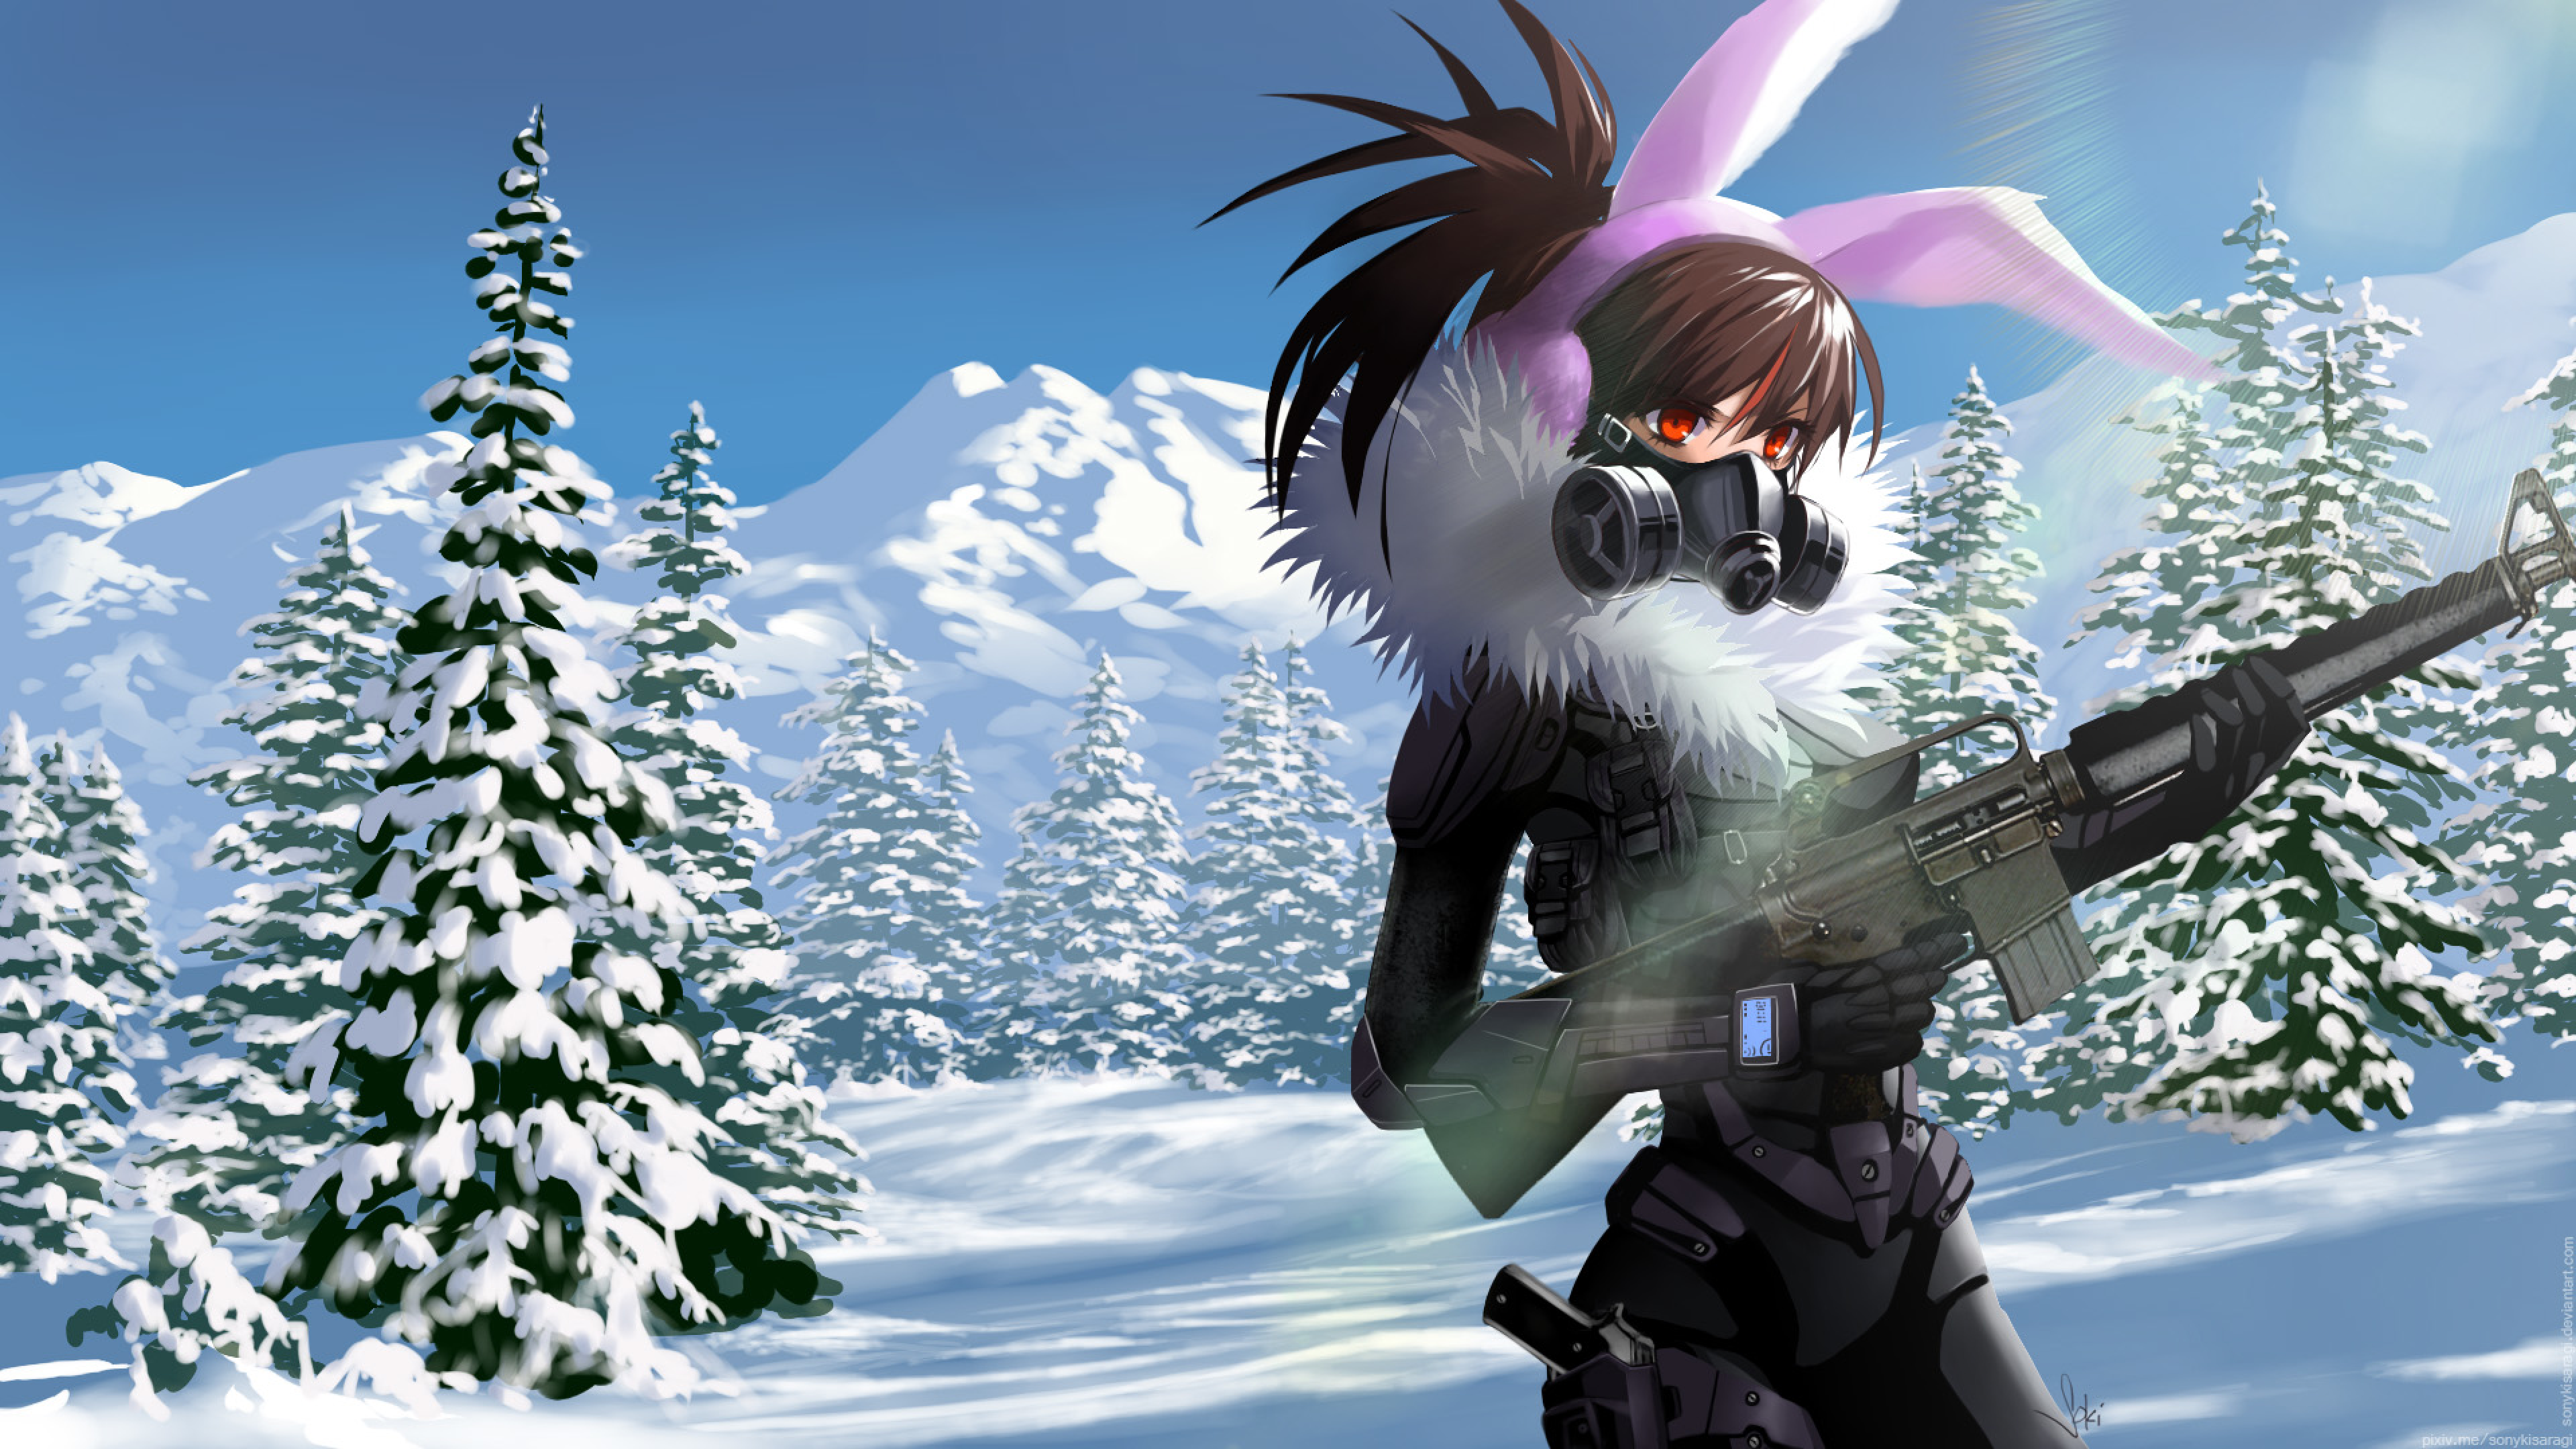 Download 3840x2160 Anime Girl, Gun, Armored, Gas Mask, Bunny Ears, Snow, Mountain, Winter Wallpaper for UHD TV